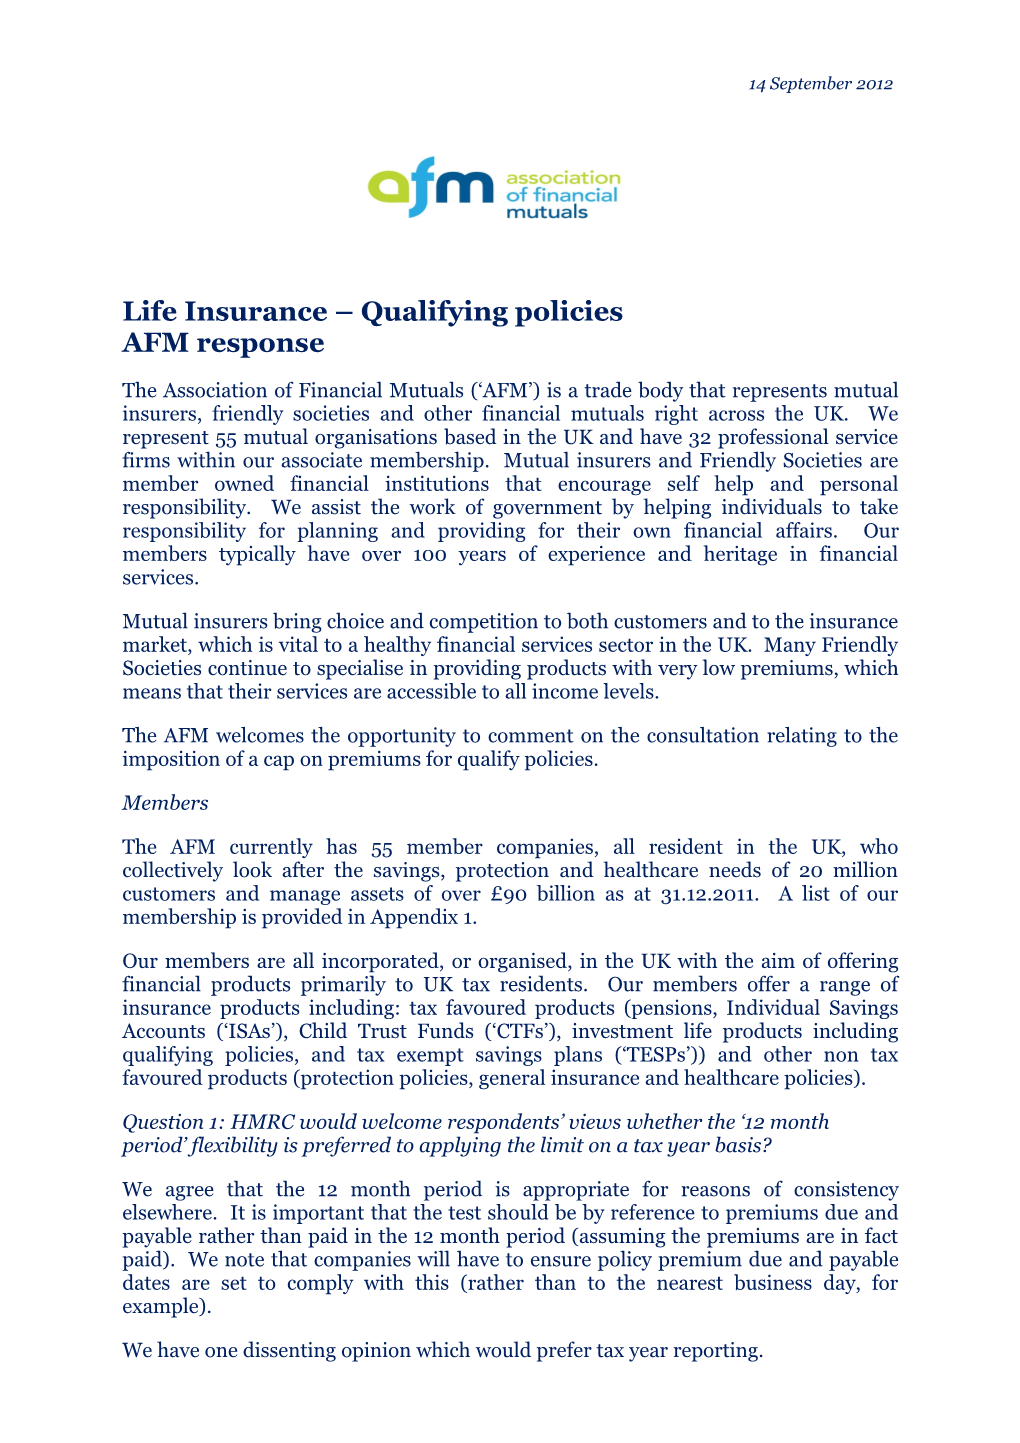 Life Insurance Qualifying Policies AFM Response